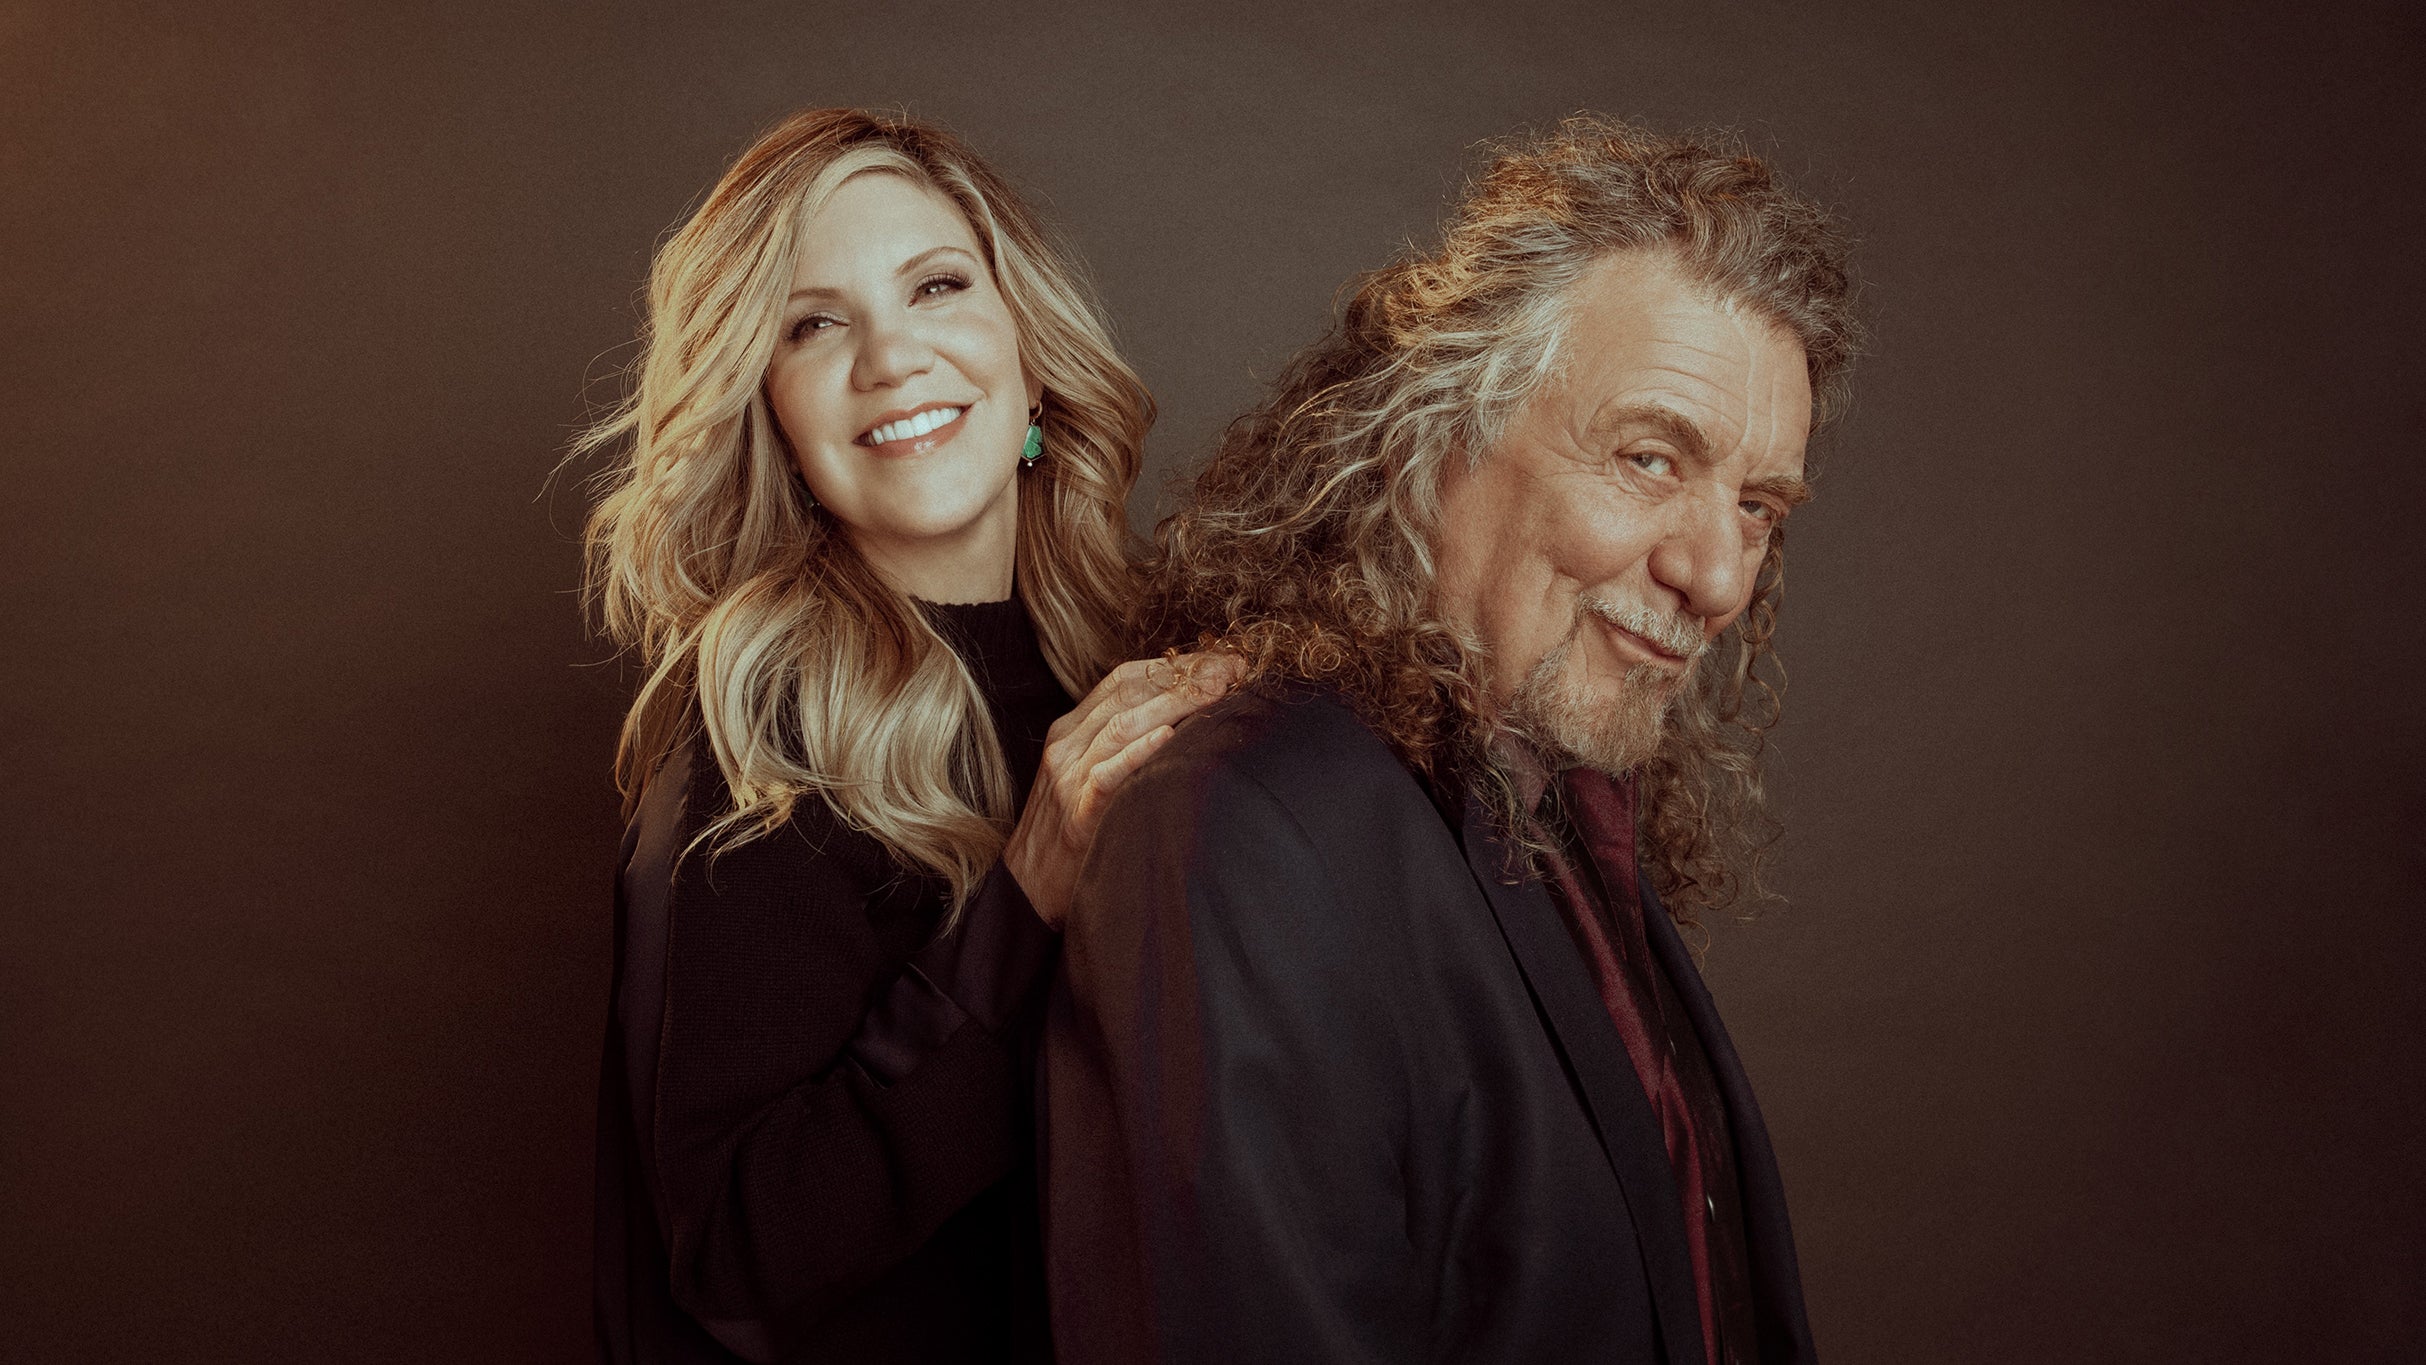 presale passcode to Robert Plant & Alison Krauss presale tickets in Madison